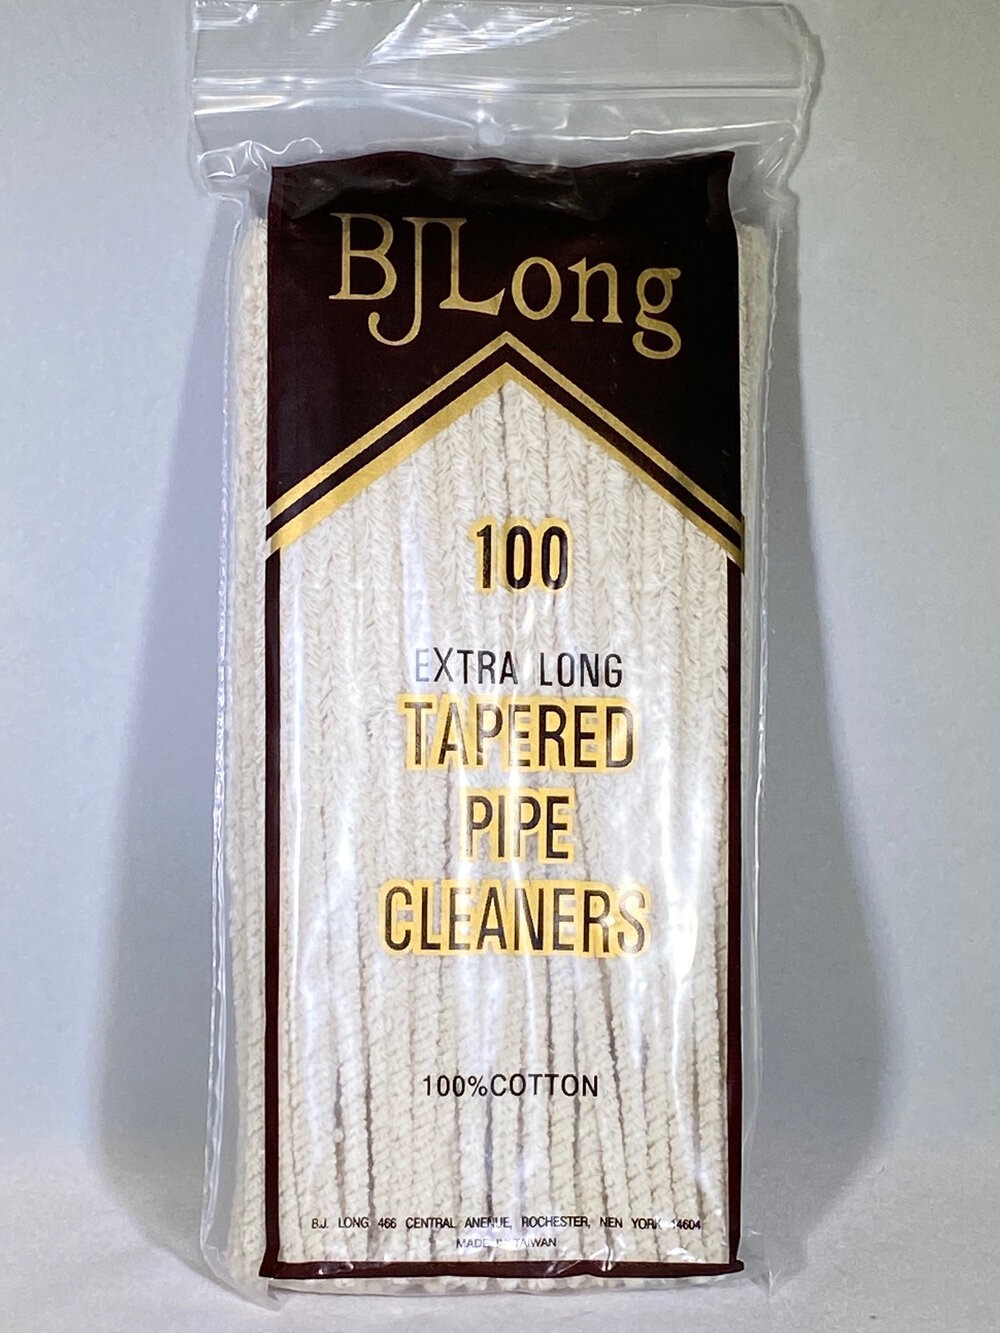 B.J. Long: PIPE CLEANERS: BRISTLE